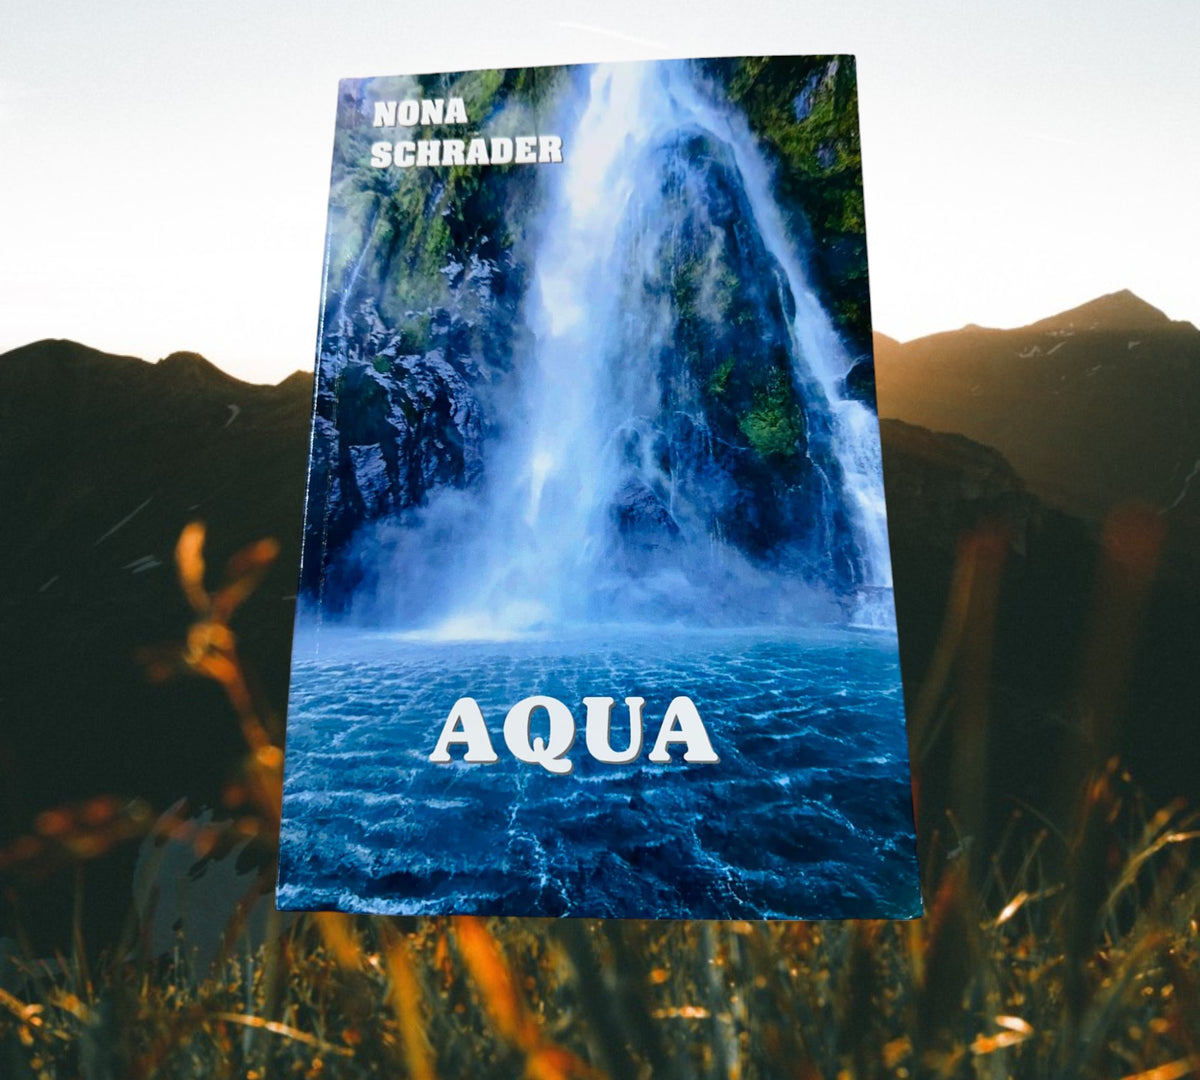 Aqua - Nora Schrader